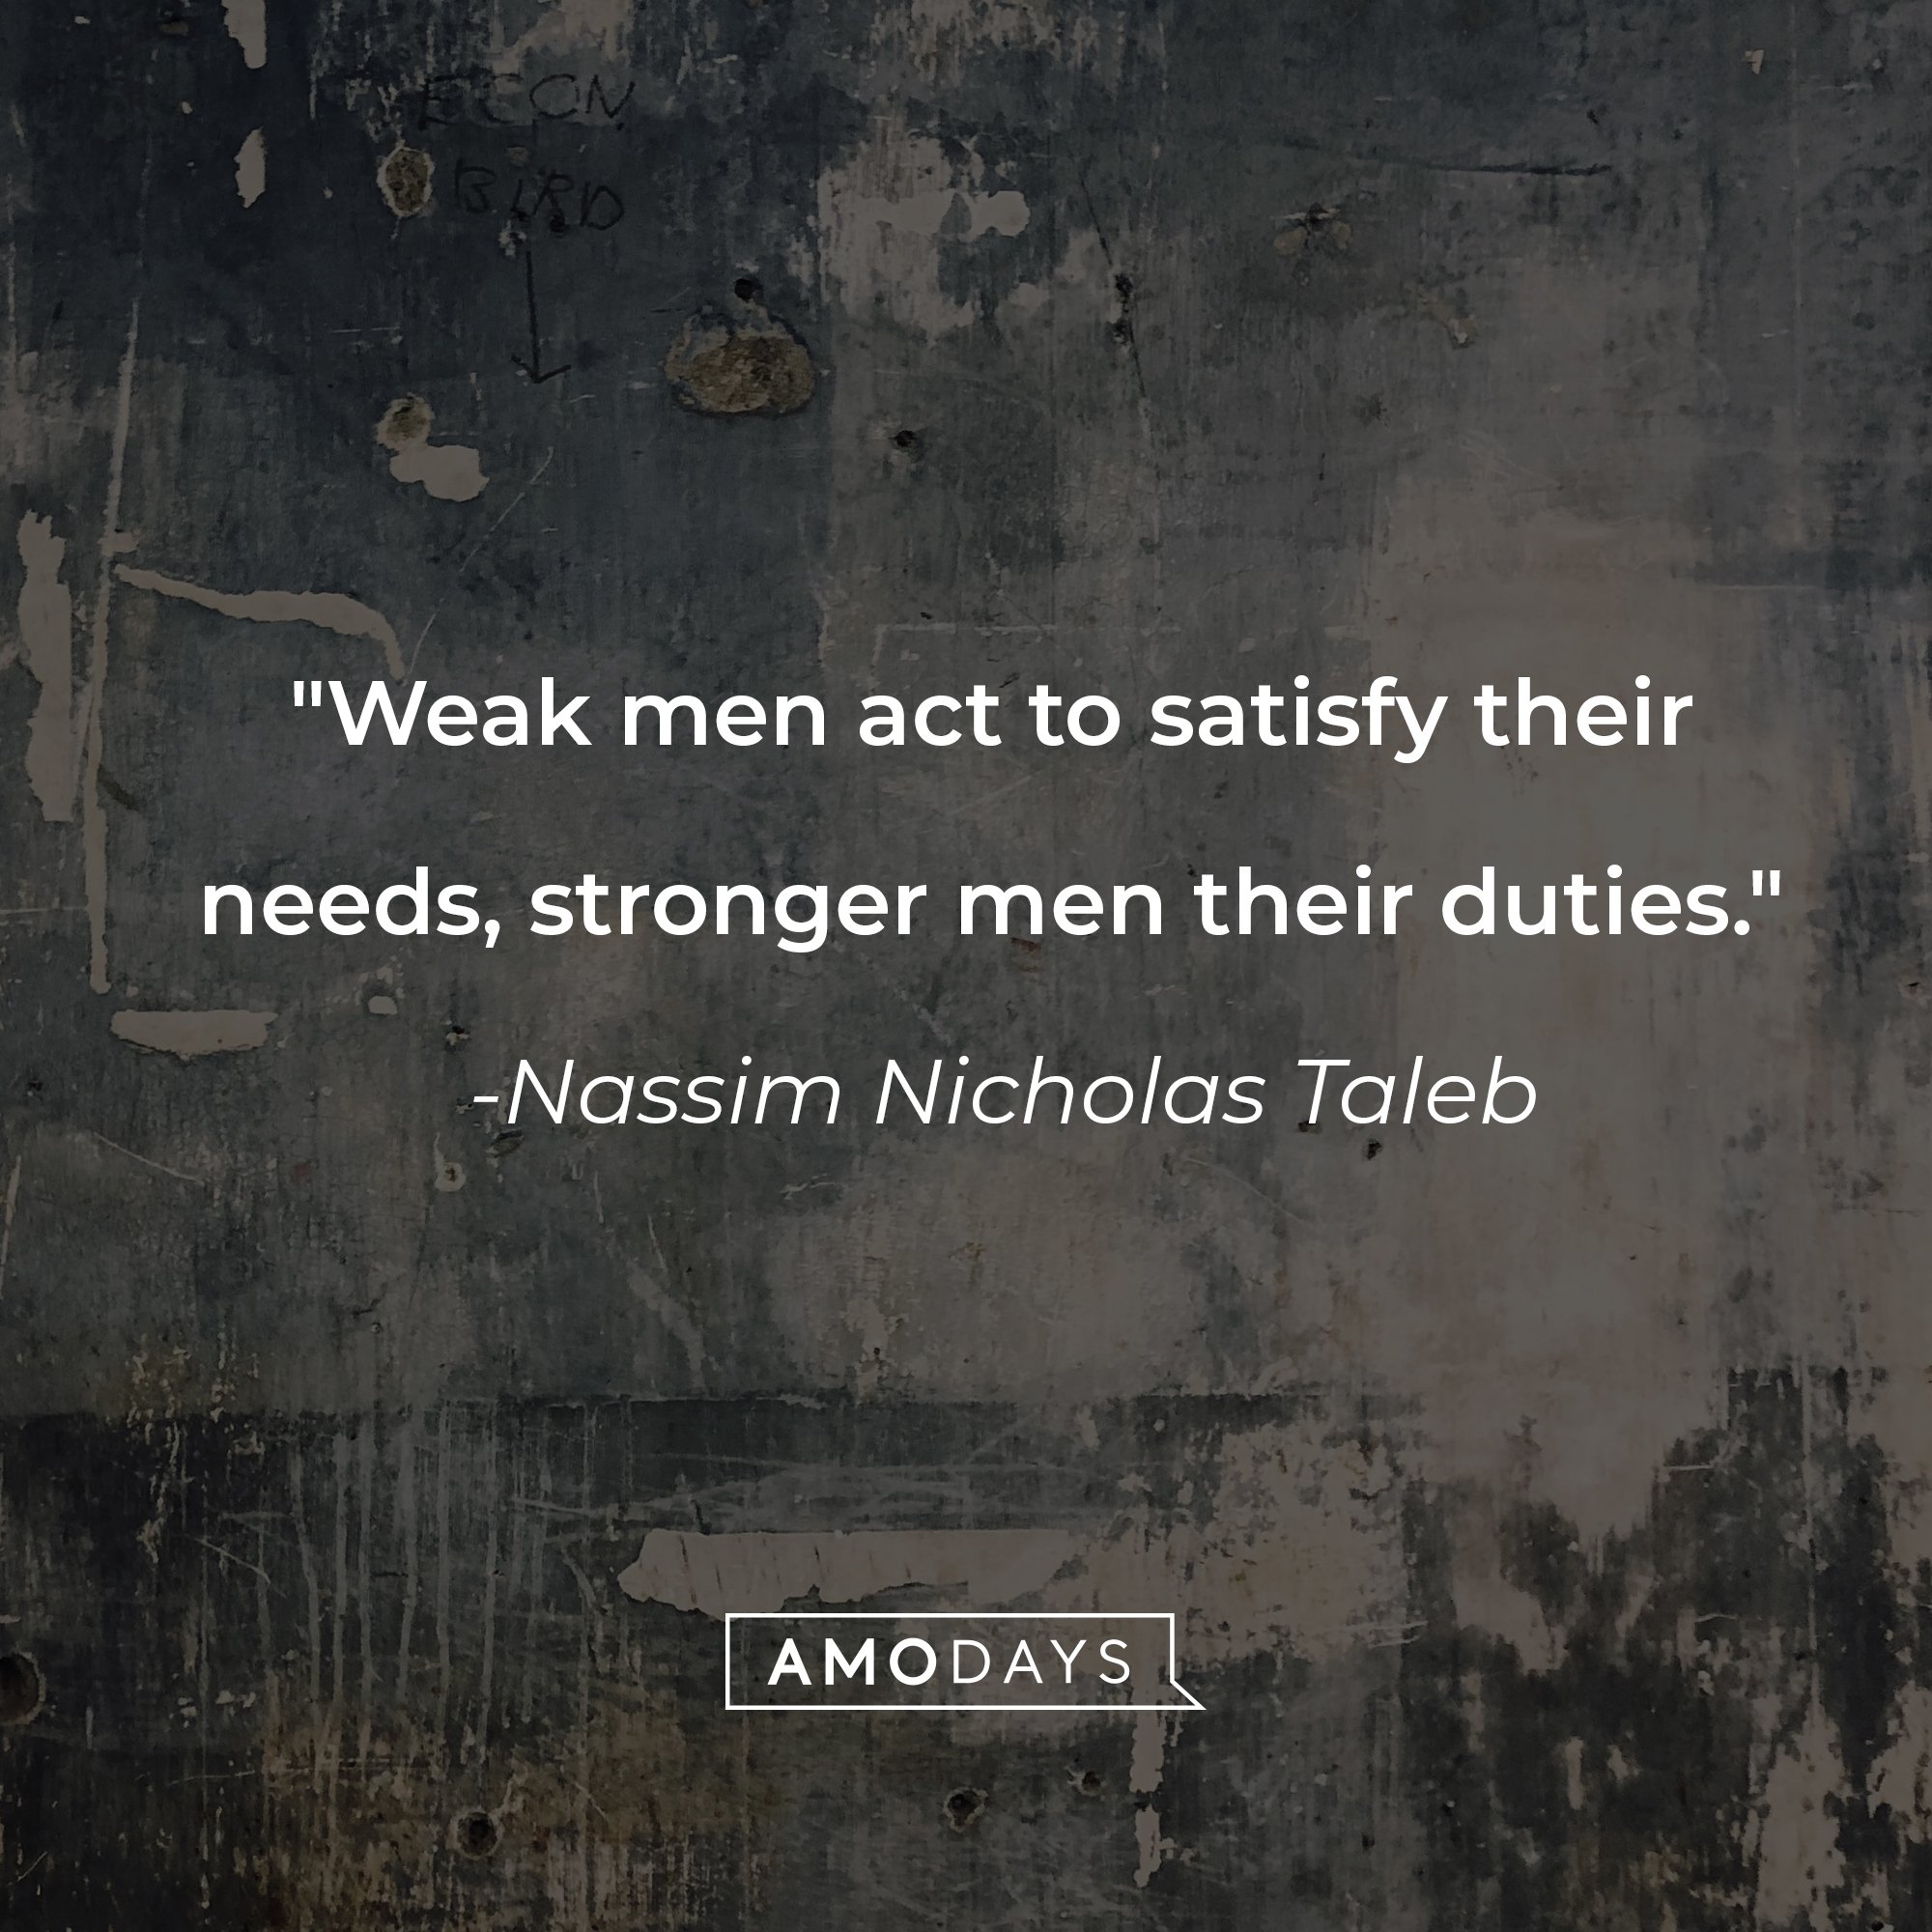 Nassim Nicholas Taleb's quote: "Weak men act to satisfy their needs, stronger men their duties." | Image: AmoDays